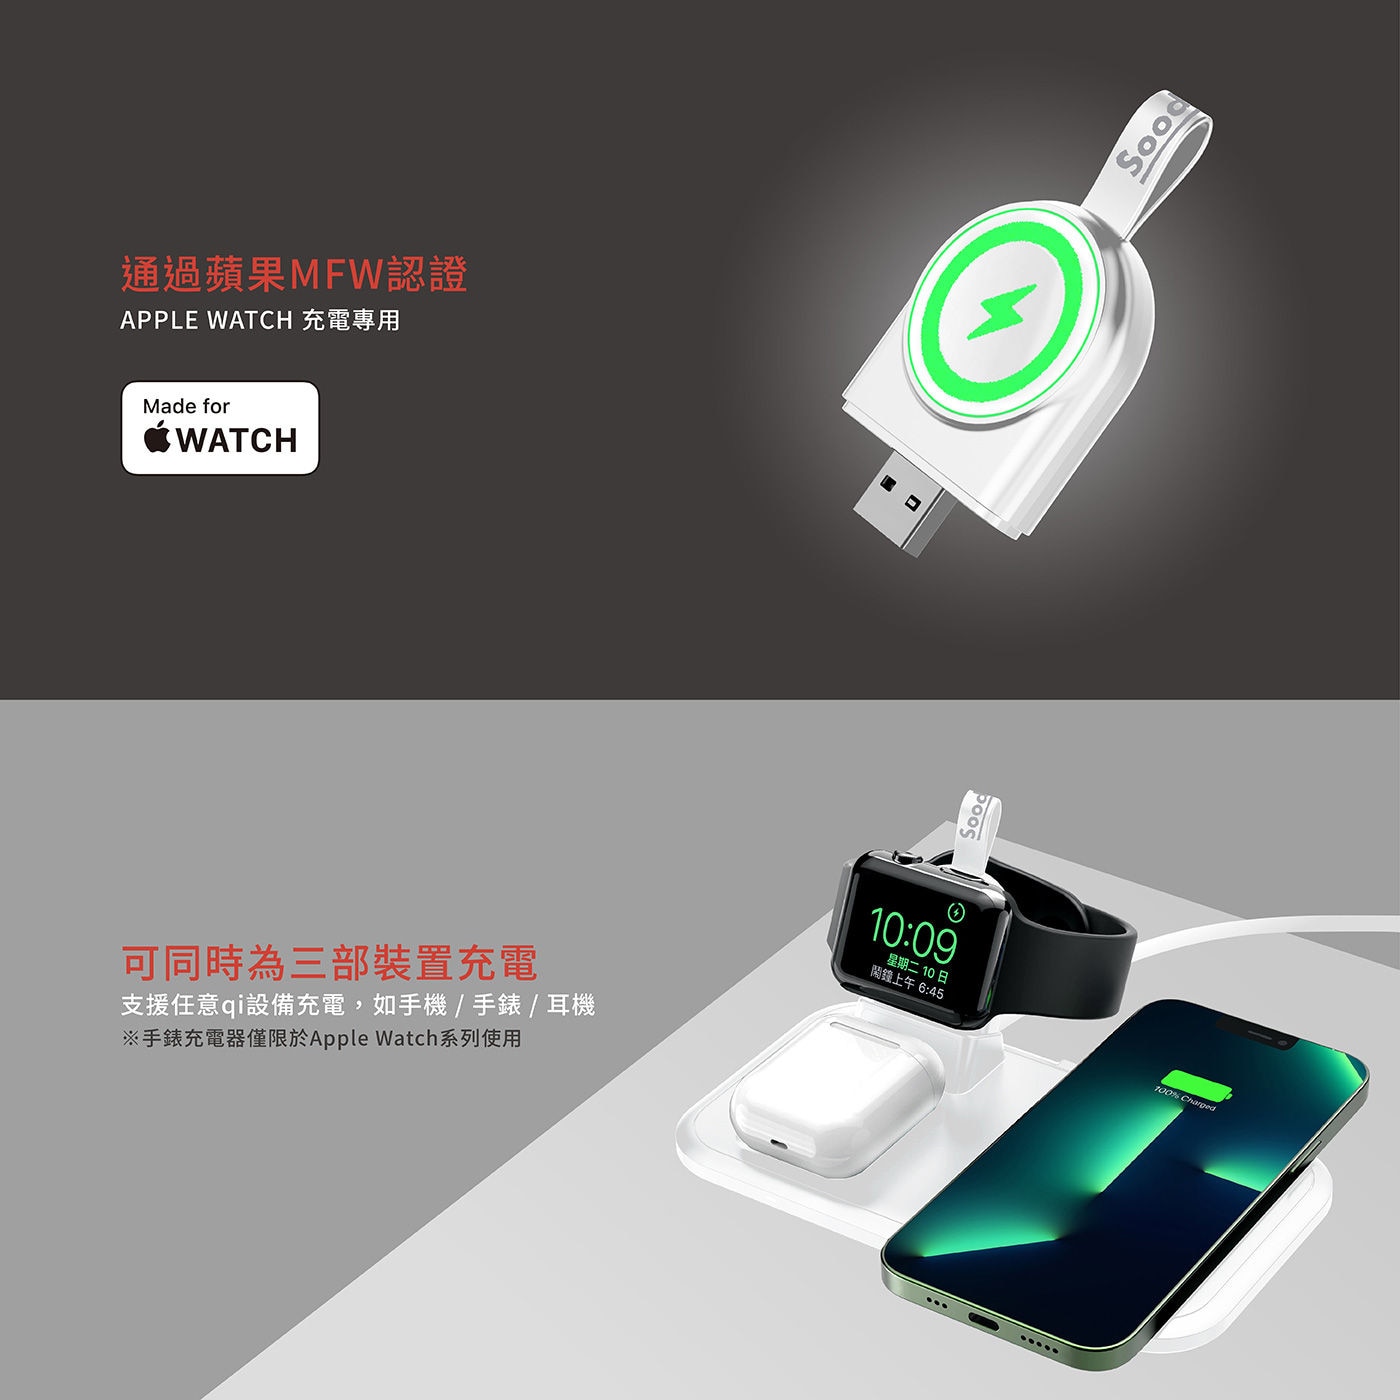 Soodatek 3-in-1 分離式無線充電座蘋果MFW認證/可同時為三部裝置充電:手機/手錶/耳機